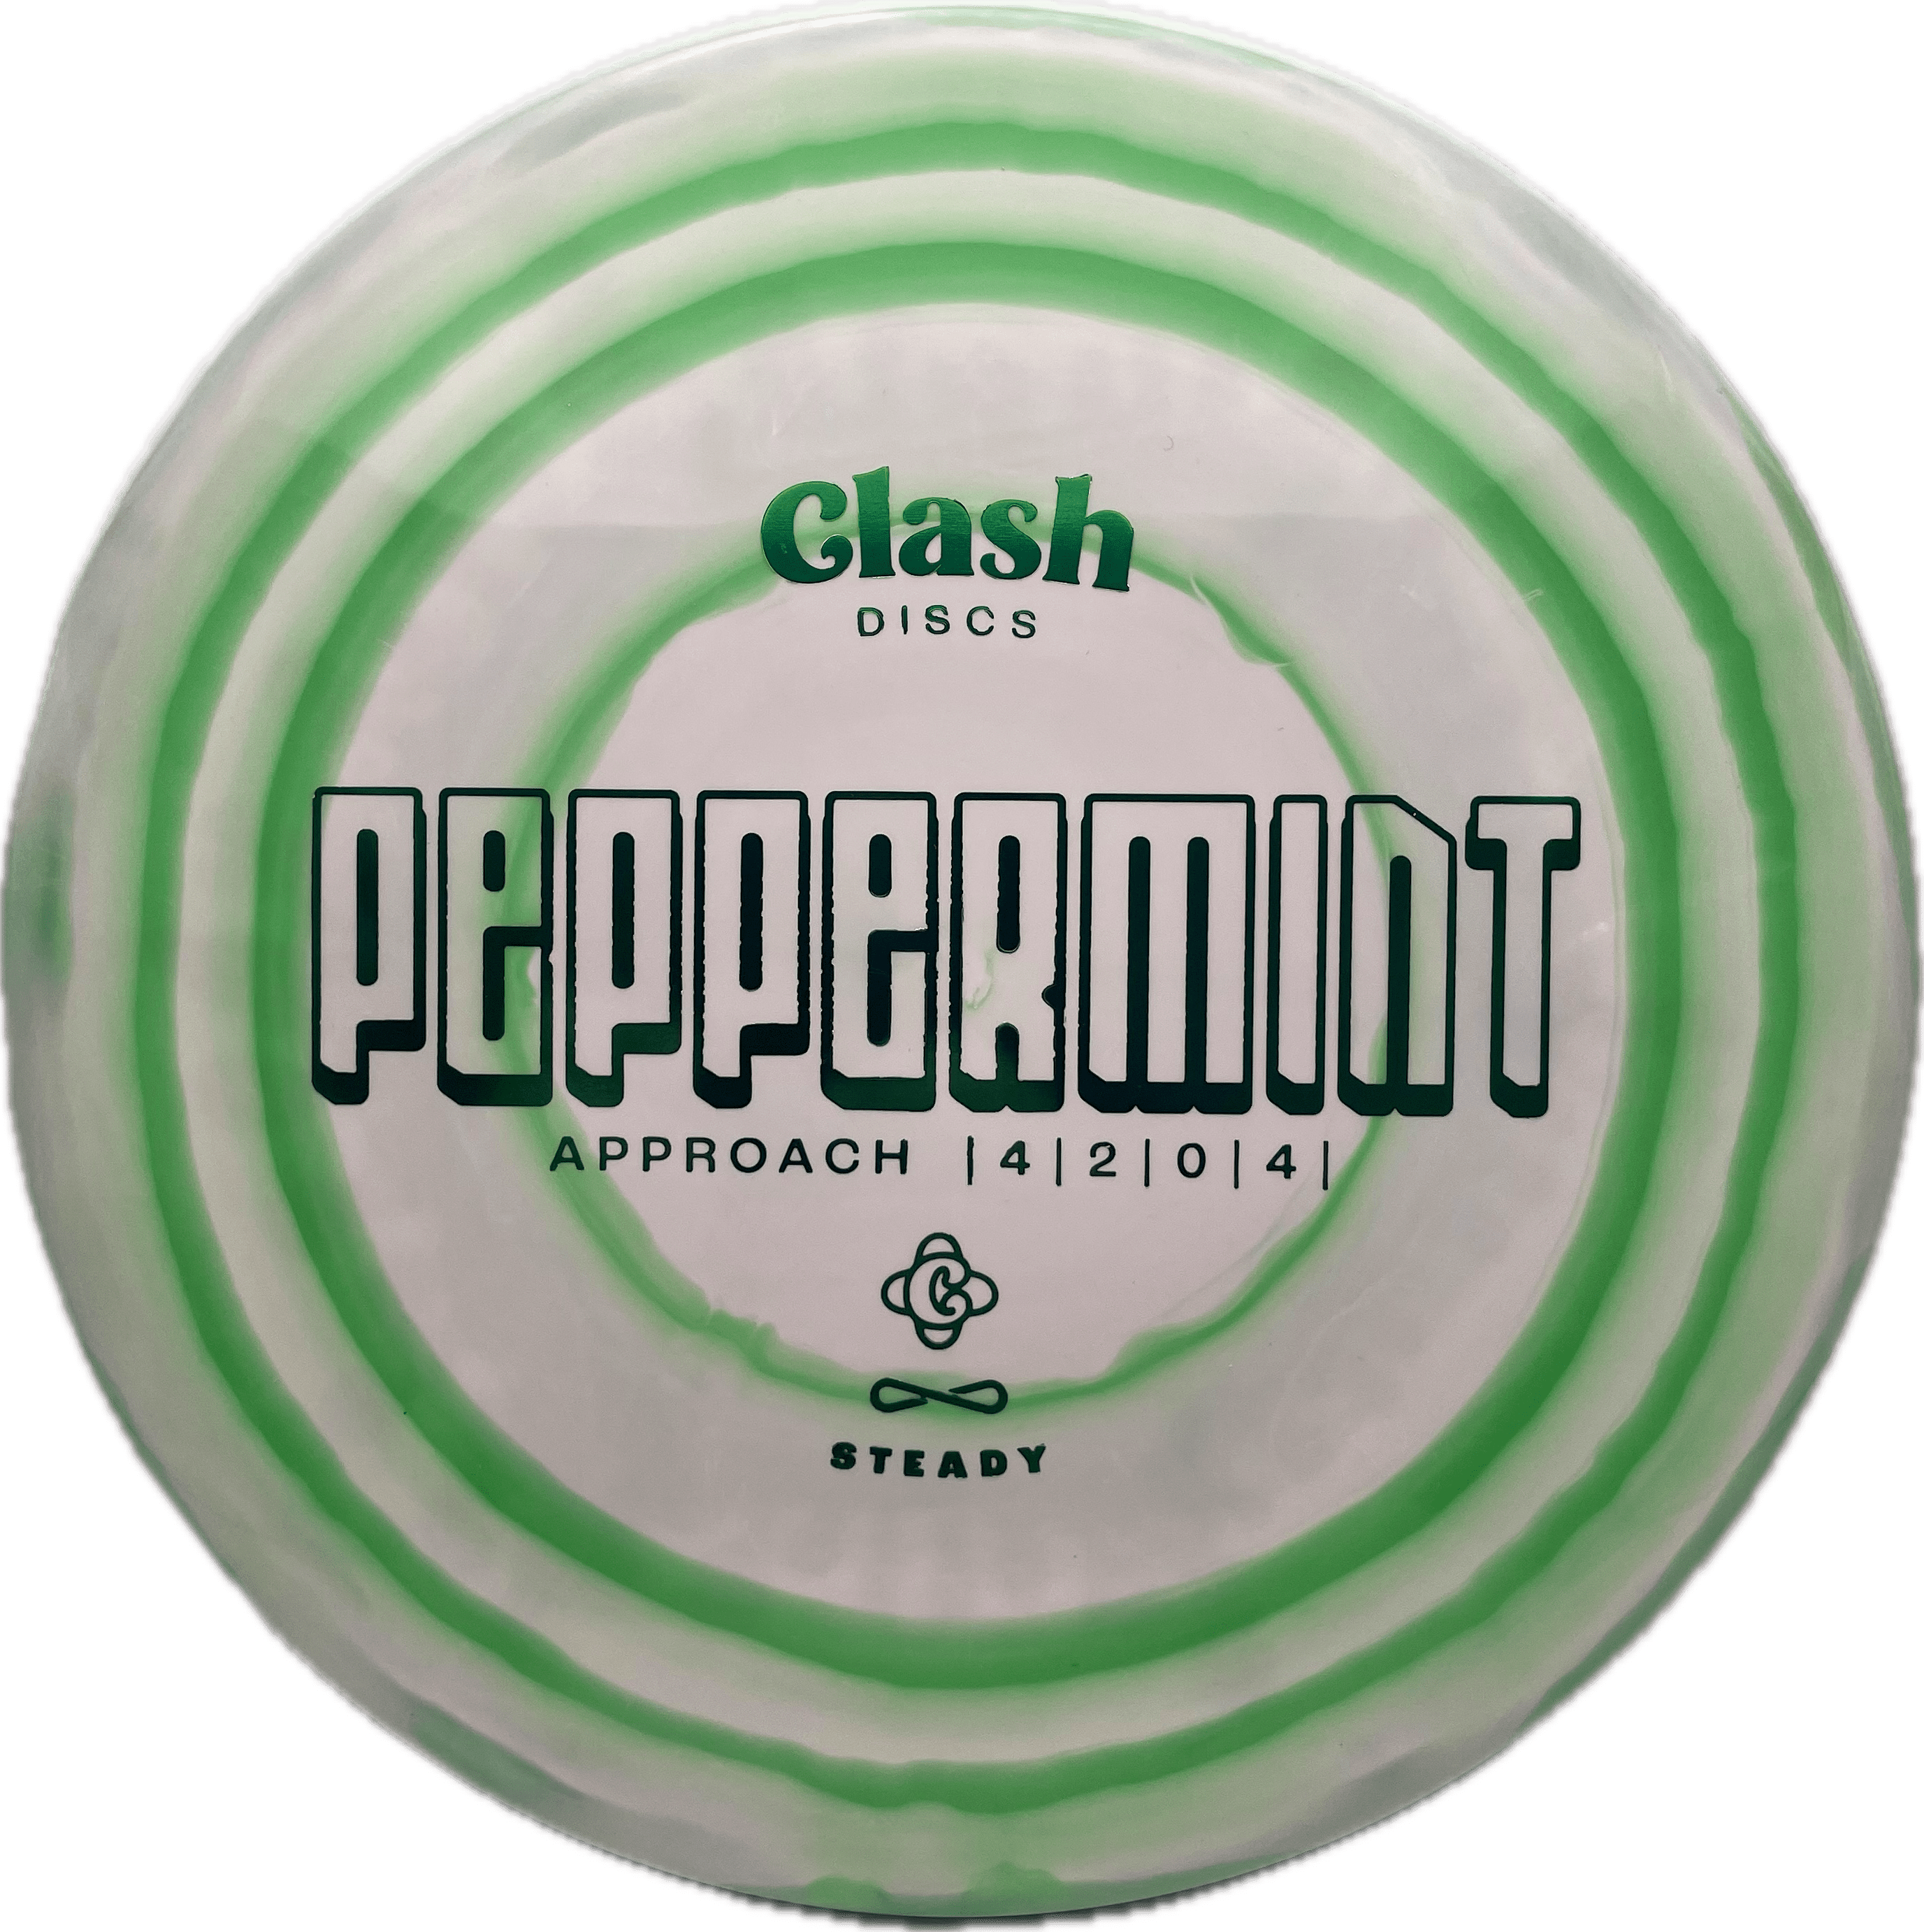 Clash Disc Clash Peppermint, Ring Steady, 173-174, Green/White Rings, Metallic